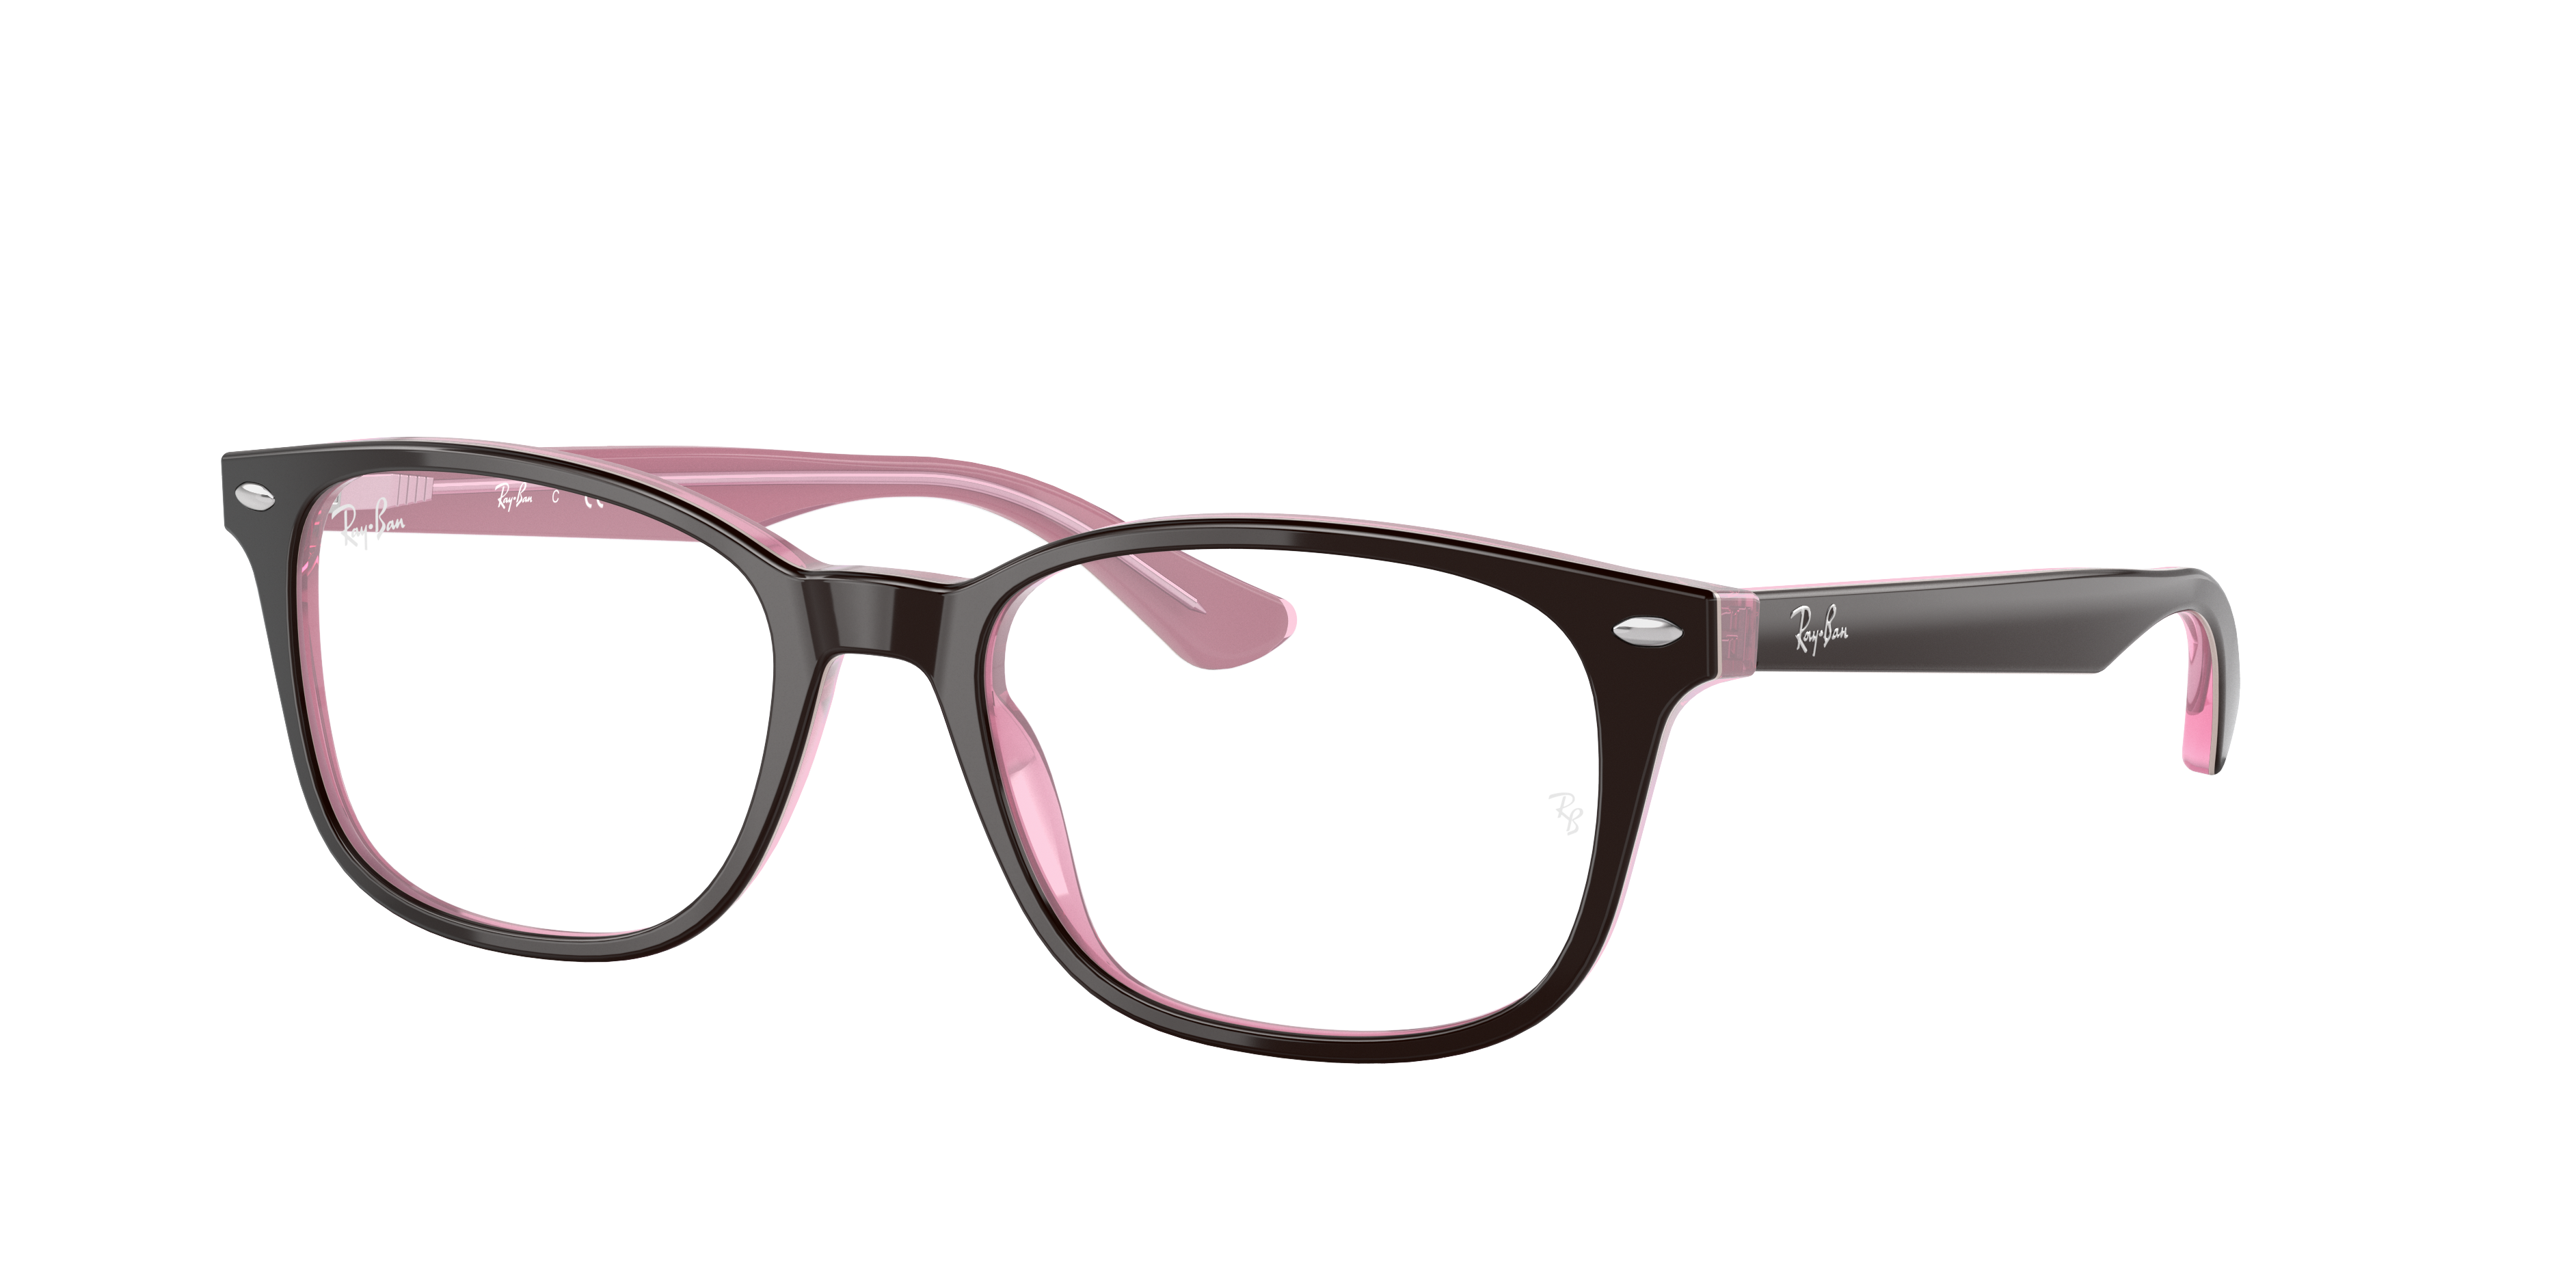 Rb5375 Optics Eyeglasses with Brown On Pink Frame | Ray-Ban®